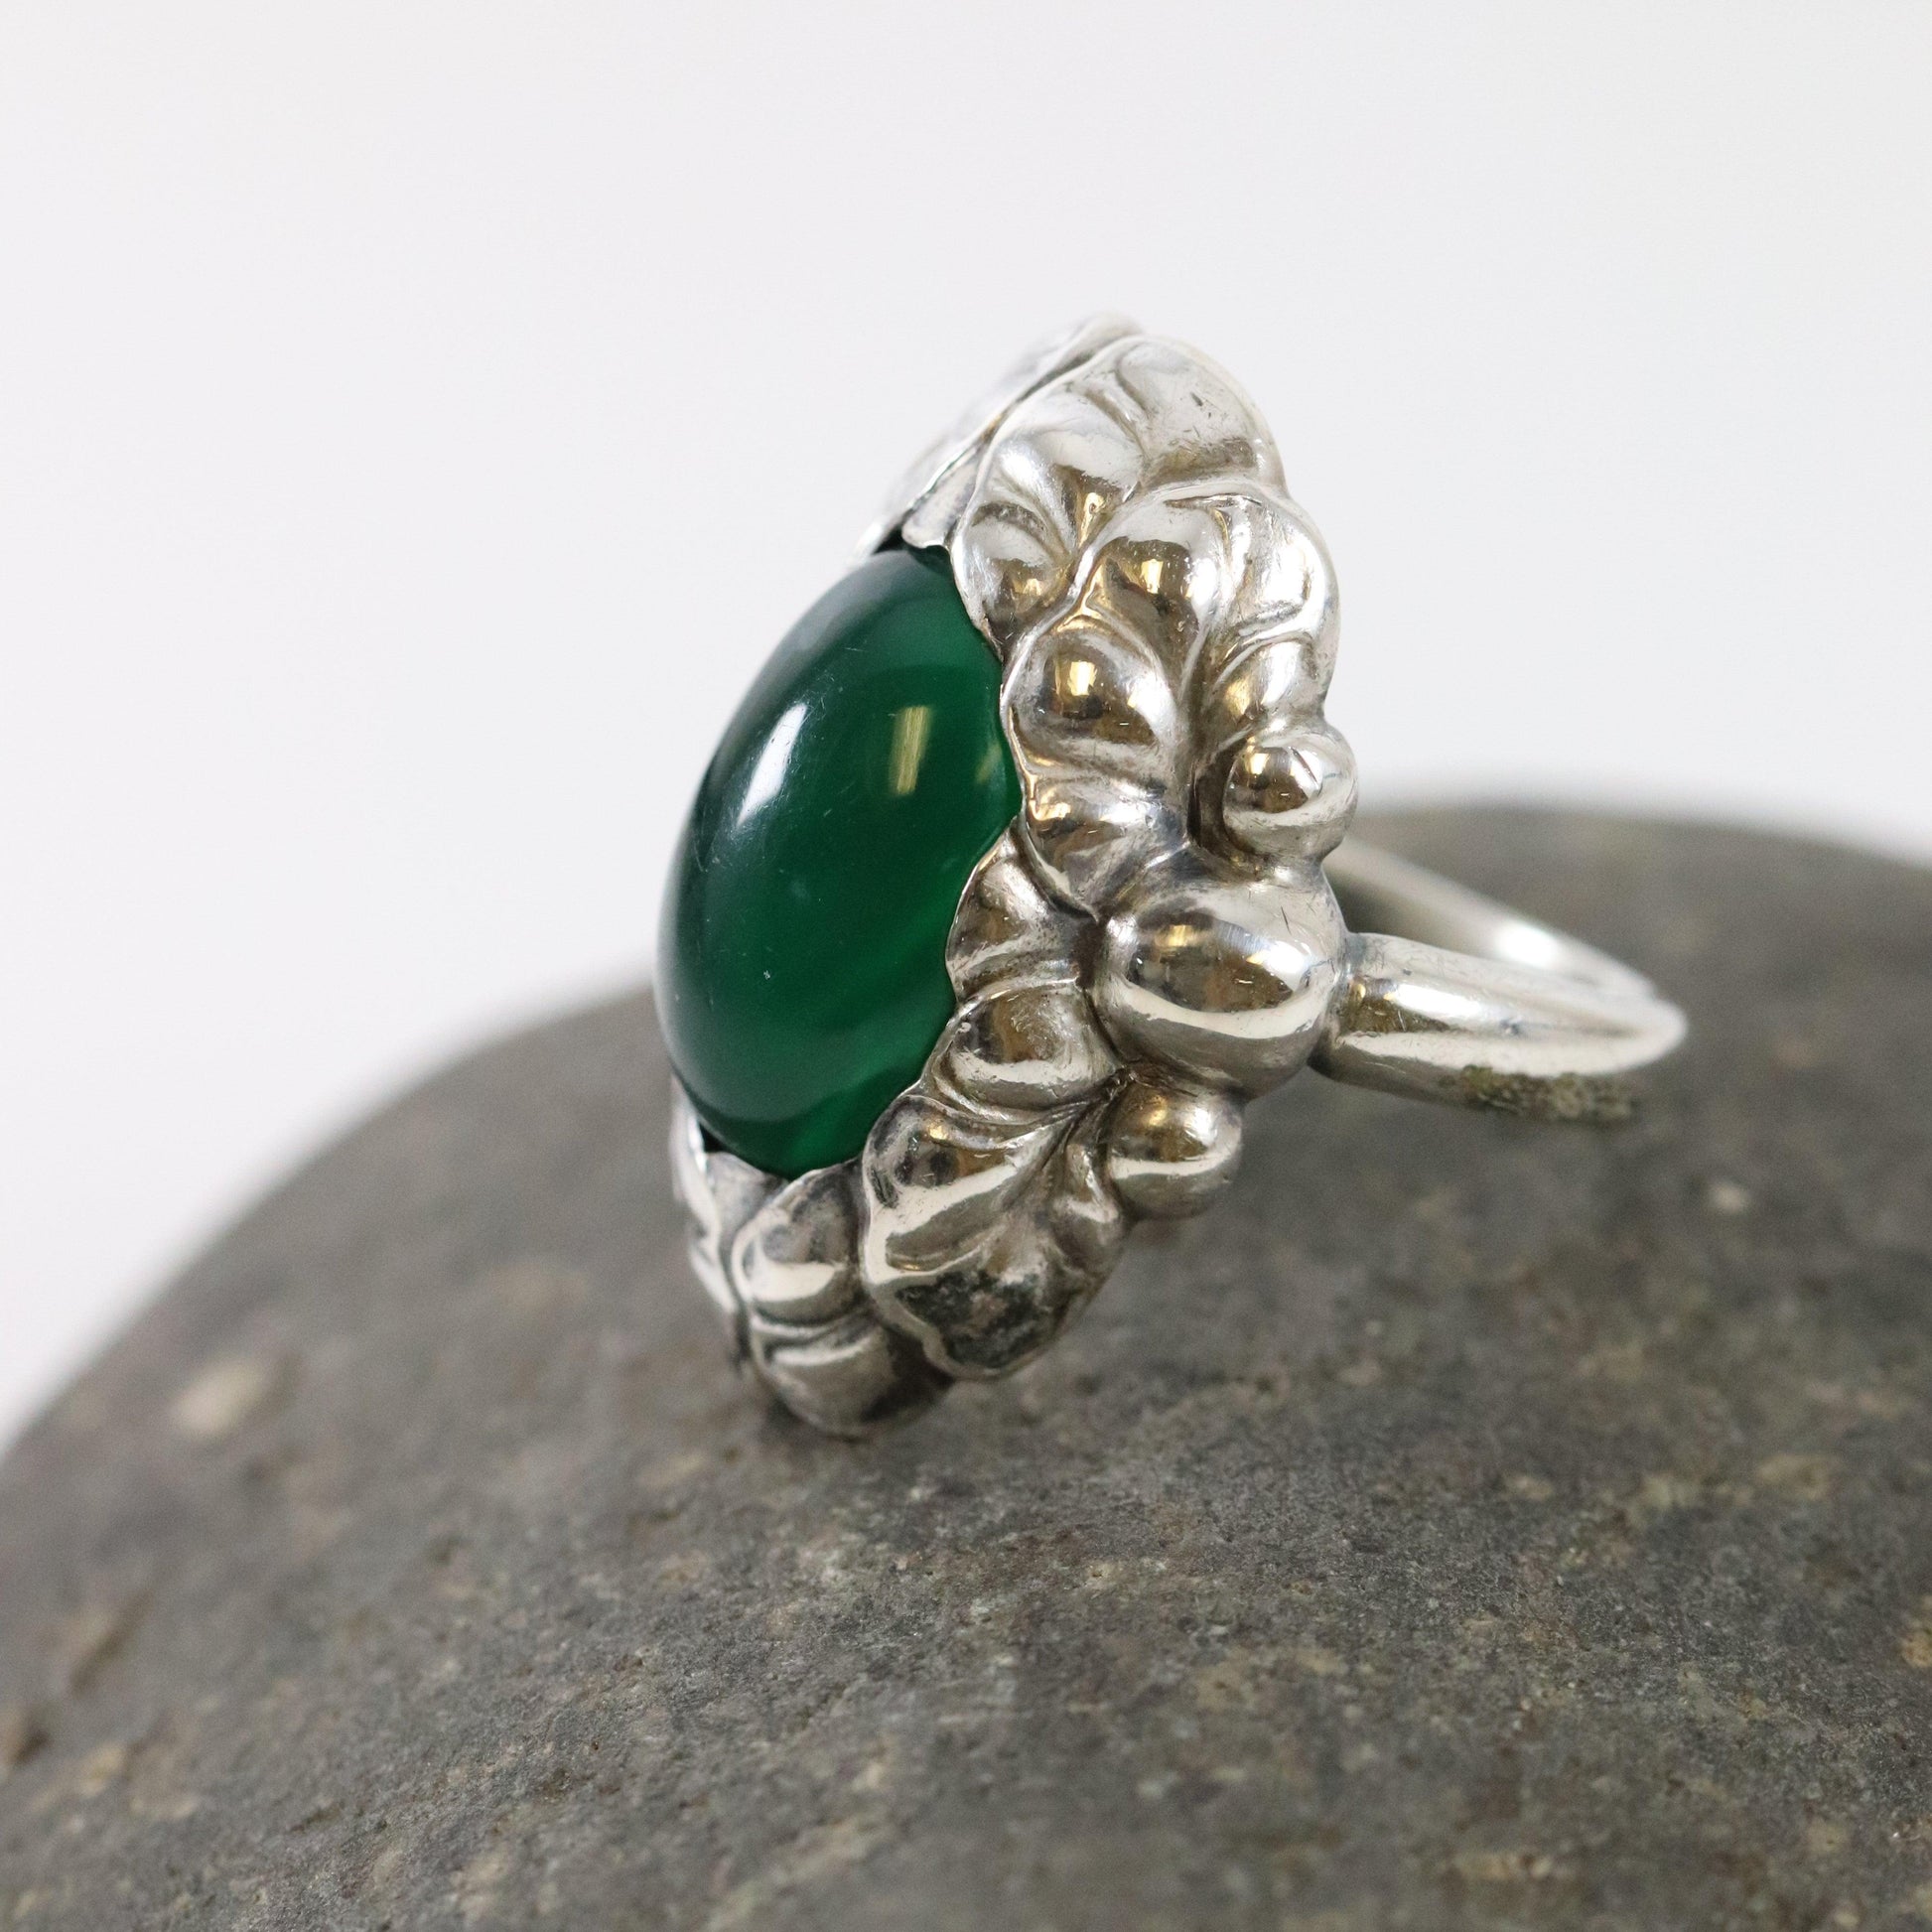 Vintage Georg Jensen Jewelry | Art Nouveau Chrysoprase Ring 11 - Carmel Fine Silver Jewelry